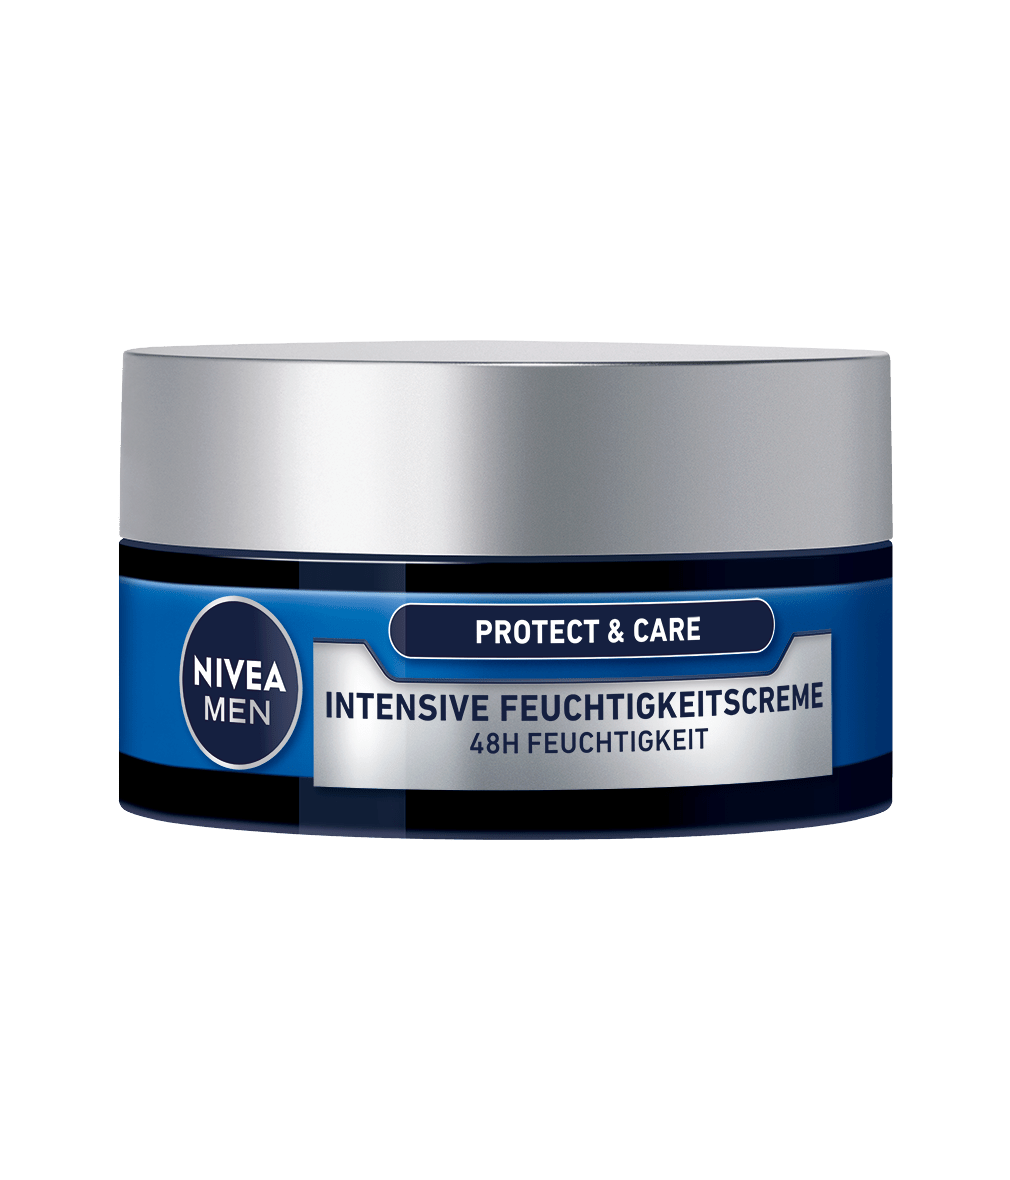 MEN Protect & Care Intensive Feuchtigkeitscreme_50ml_Tiegel